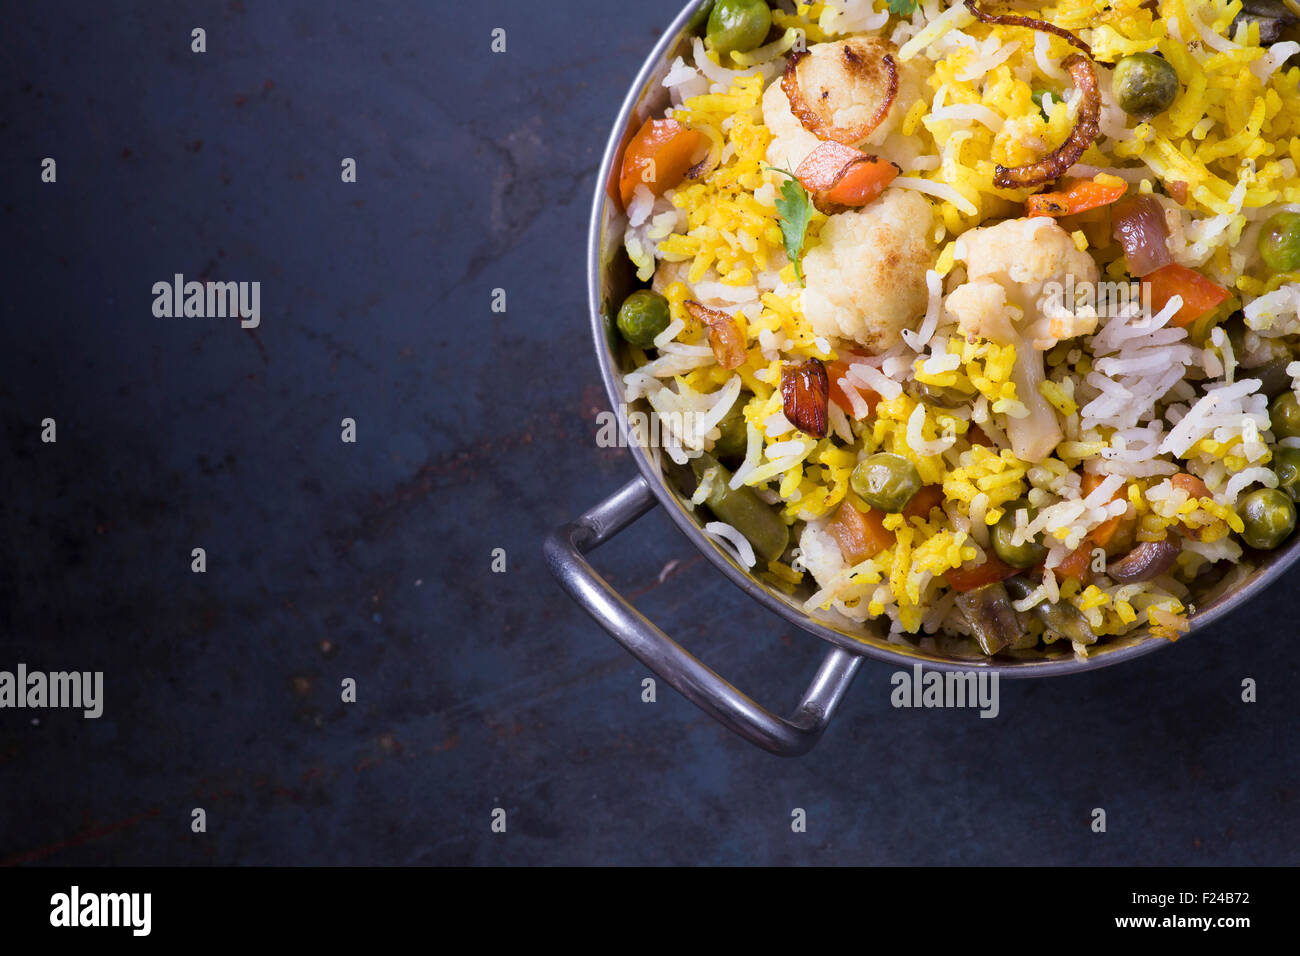 Vegetarian Biryani on dark metal background with copy space Stock Photo